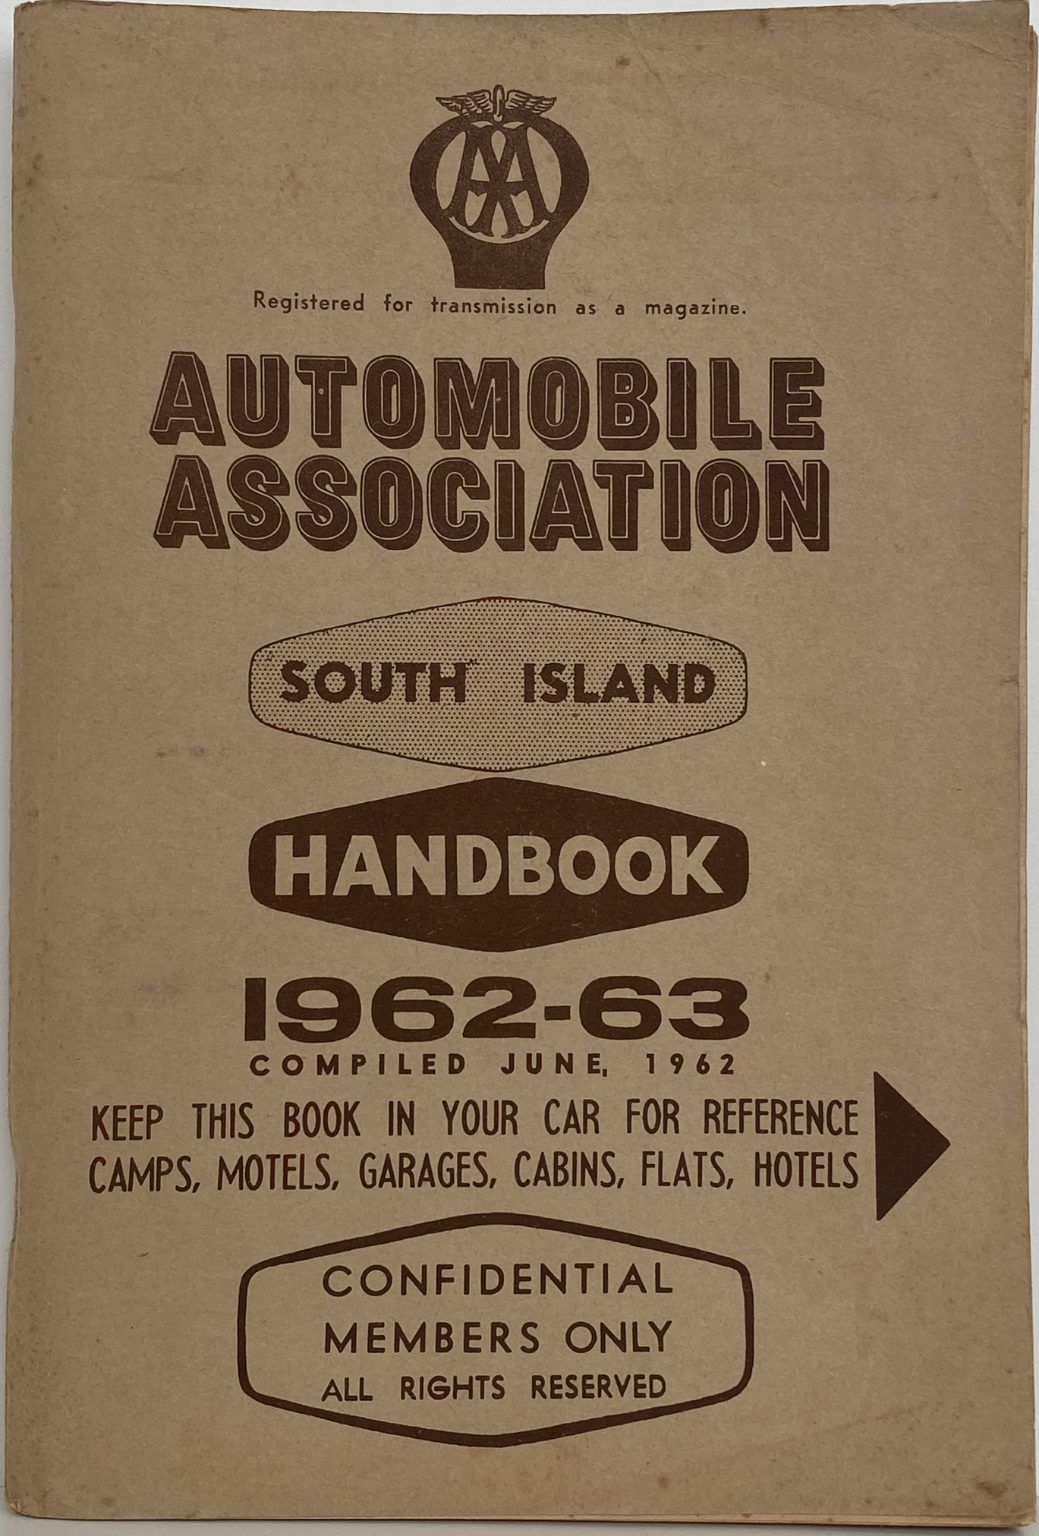 AUTOMOBILE ASSOCIATION: South Island Handbook 1962-63